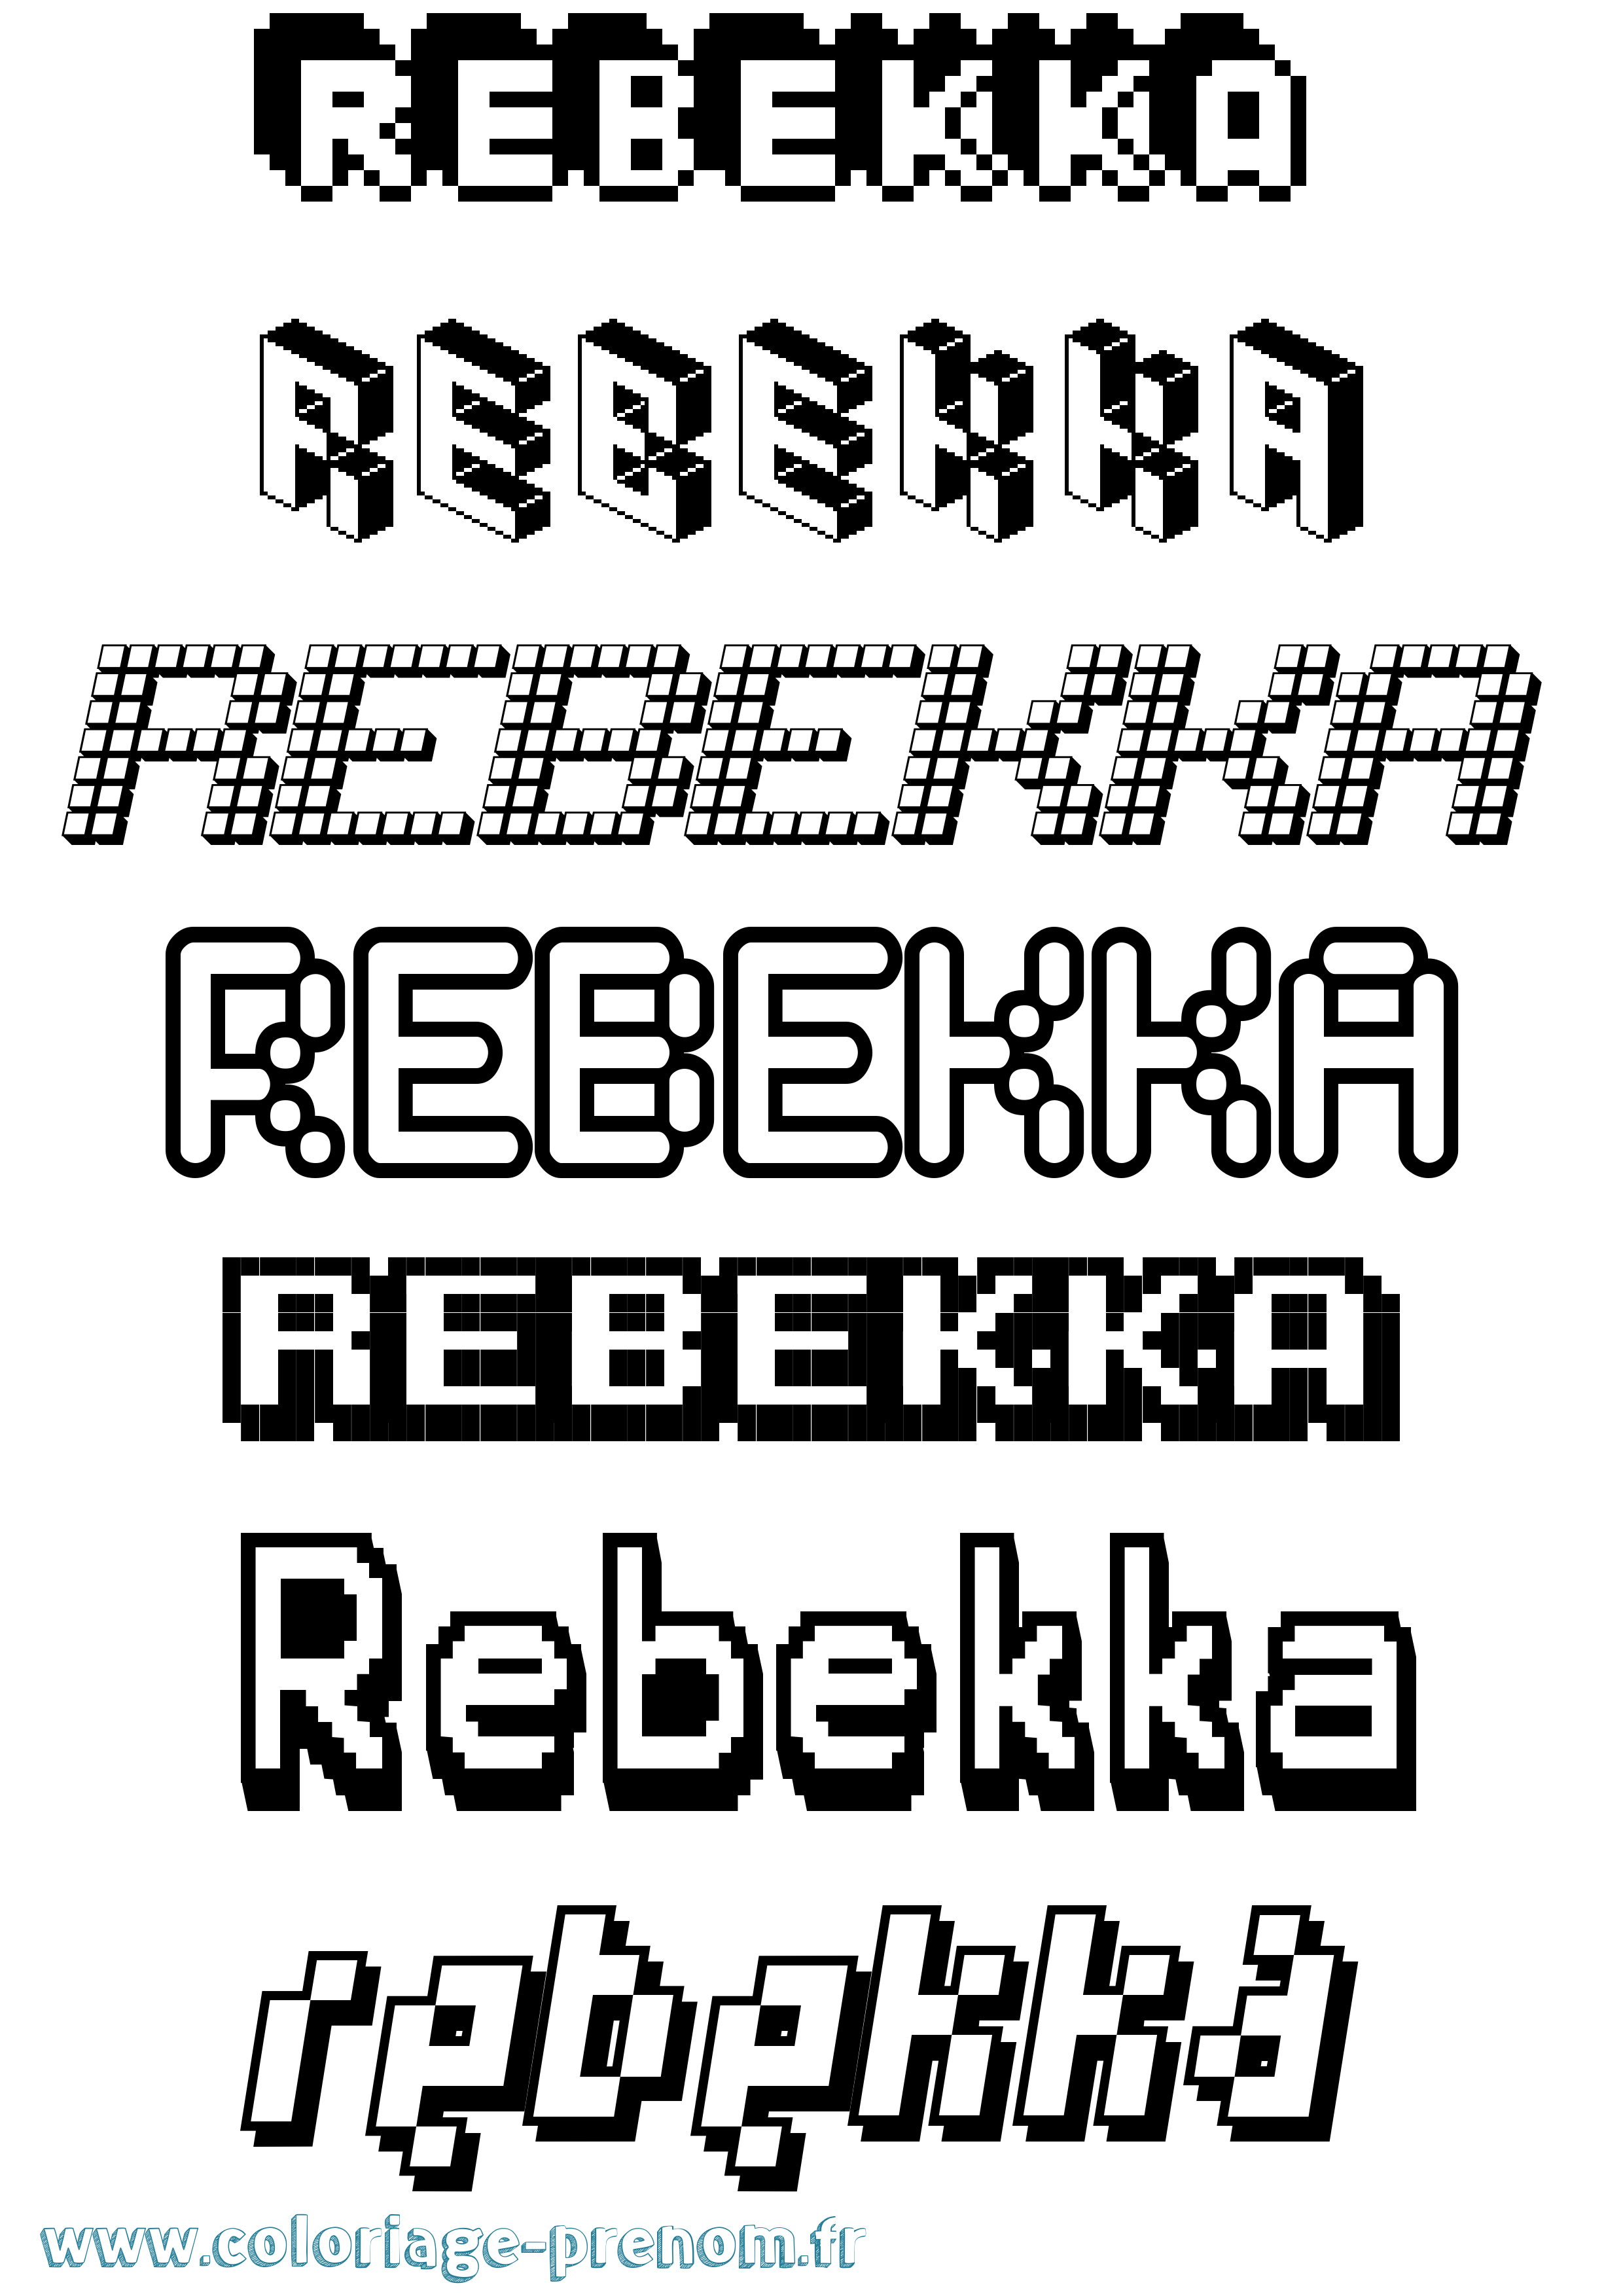 Coloriage prénom Rebekka Pixel